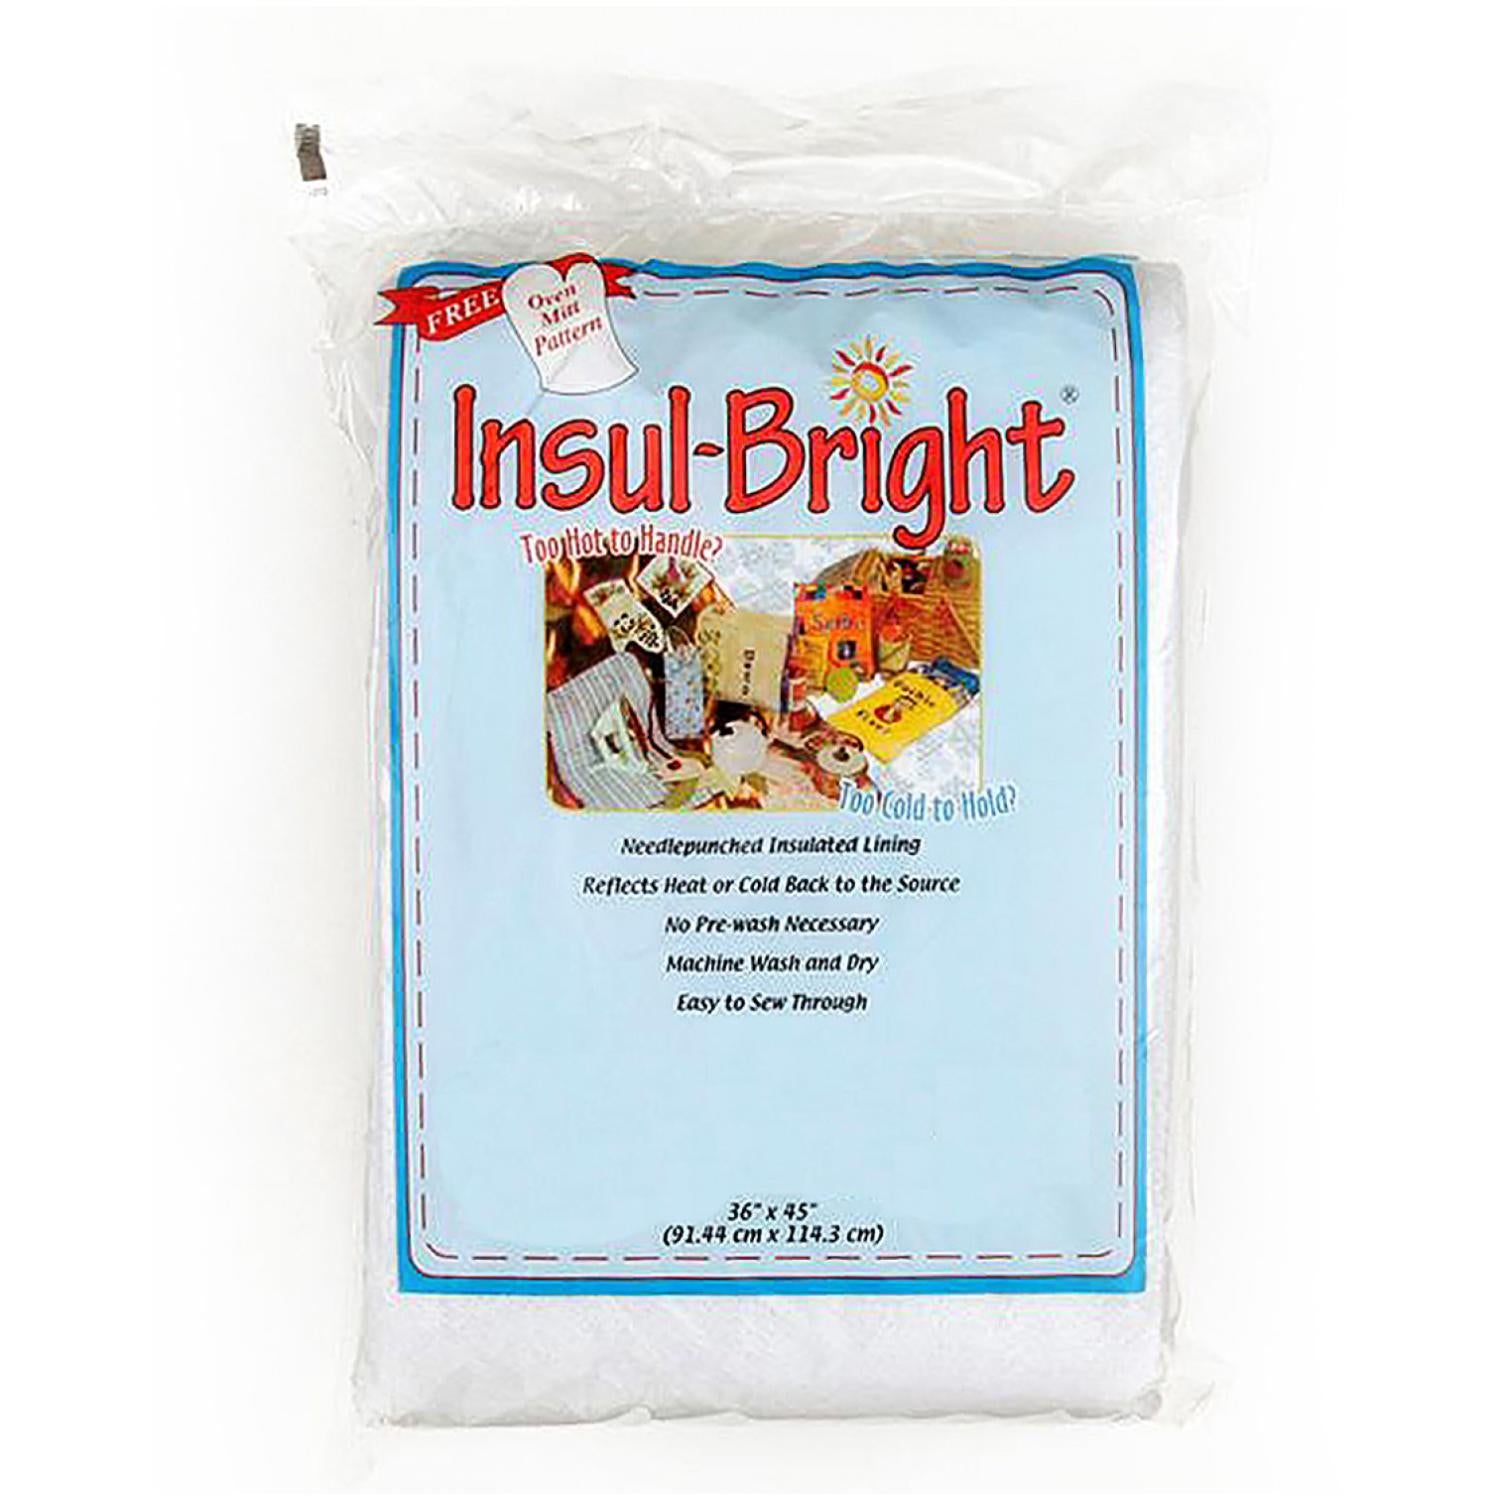 Insul Bright - 45" X 1yd - Packaged